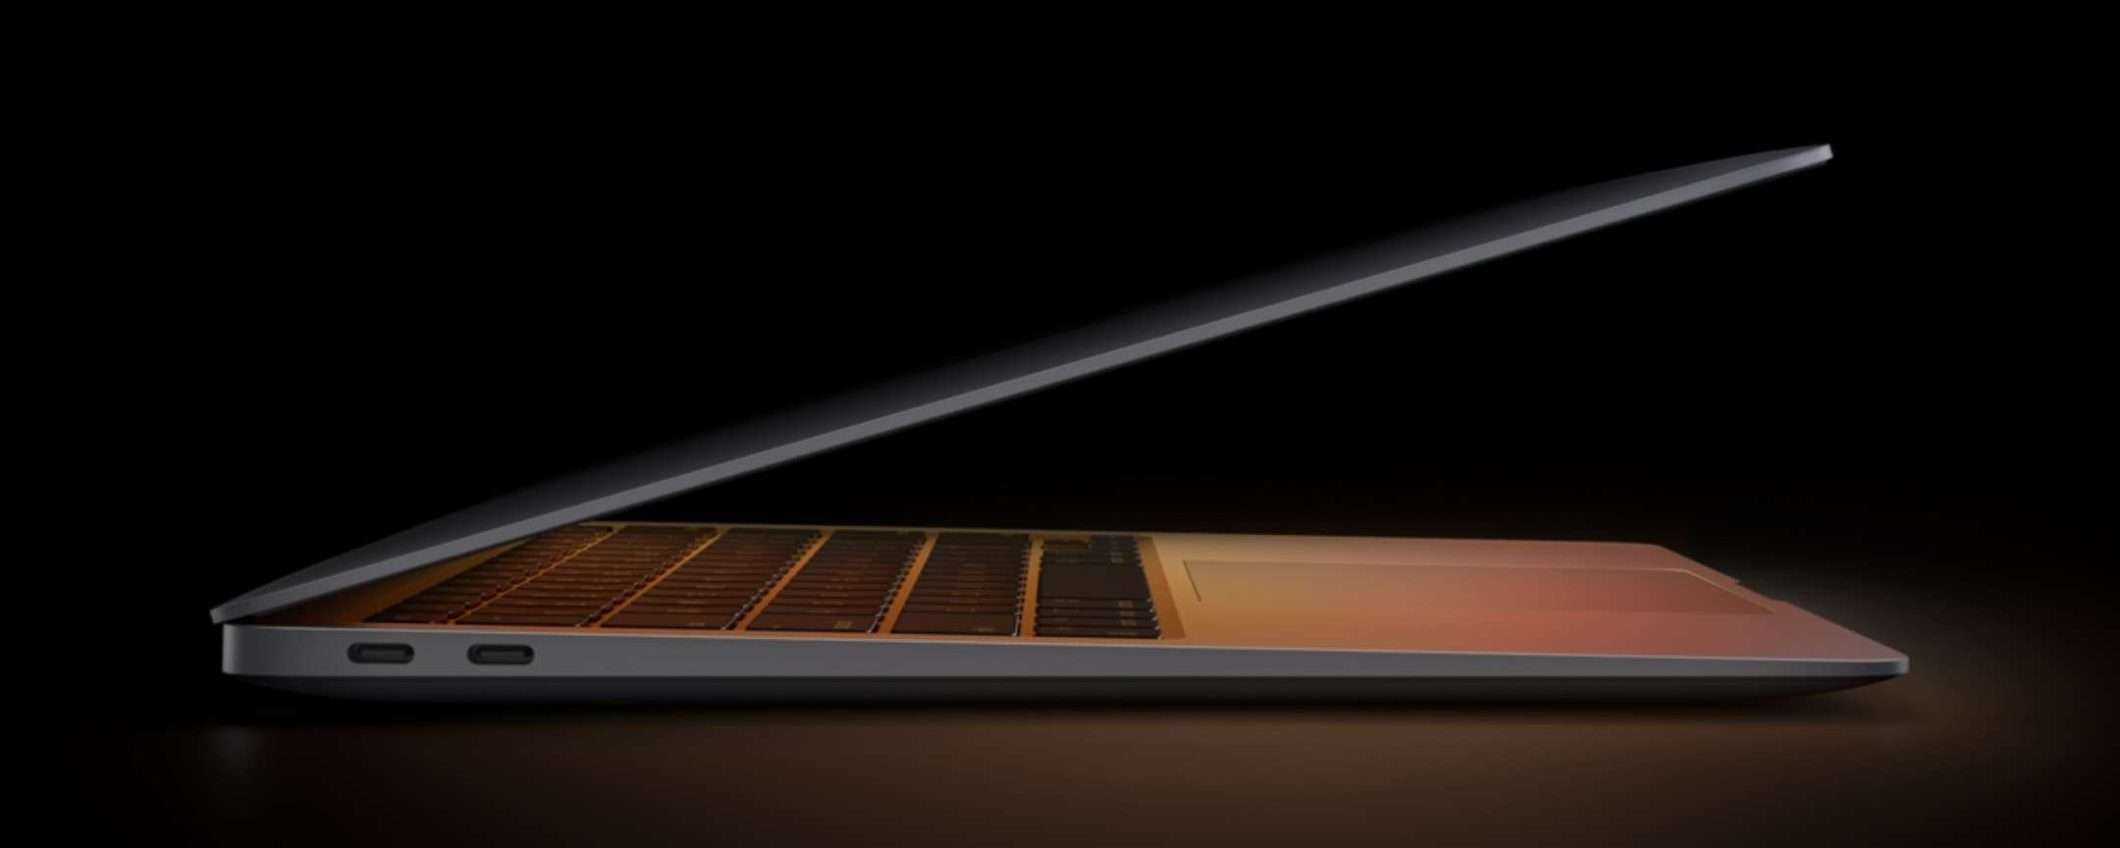 MacBook Air M1 in offerta a QUESTO PREZZO è il notebook da comprare